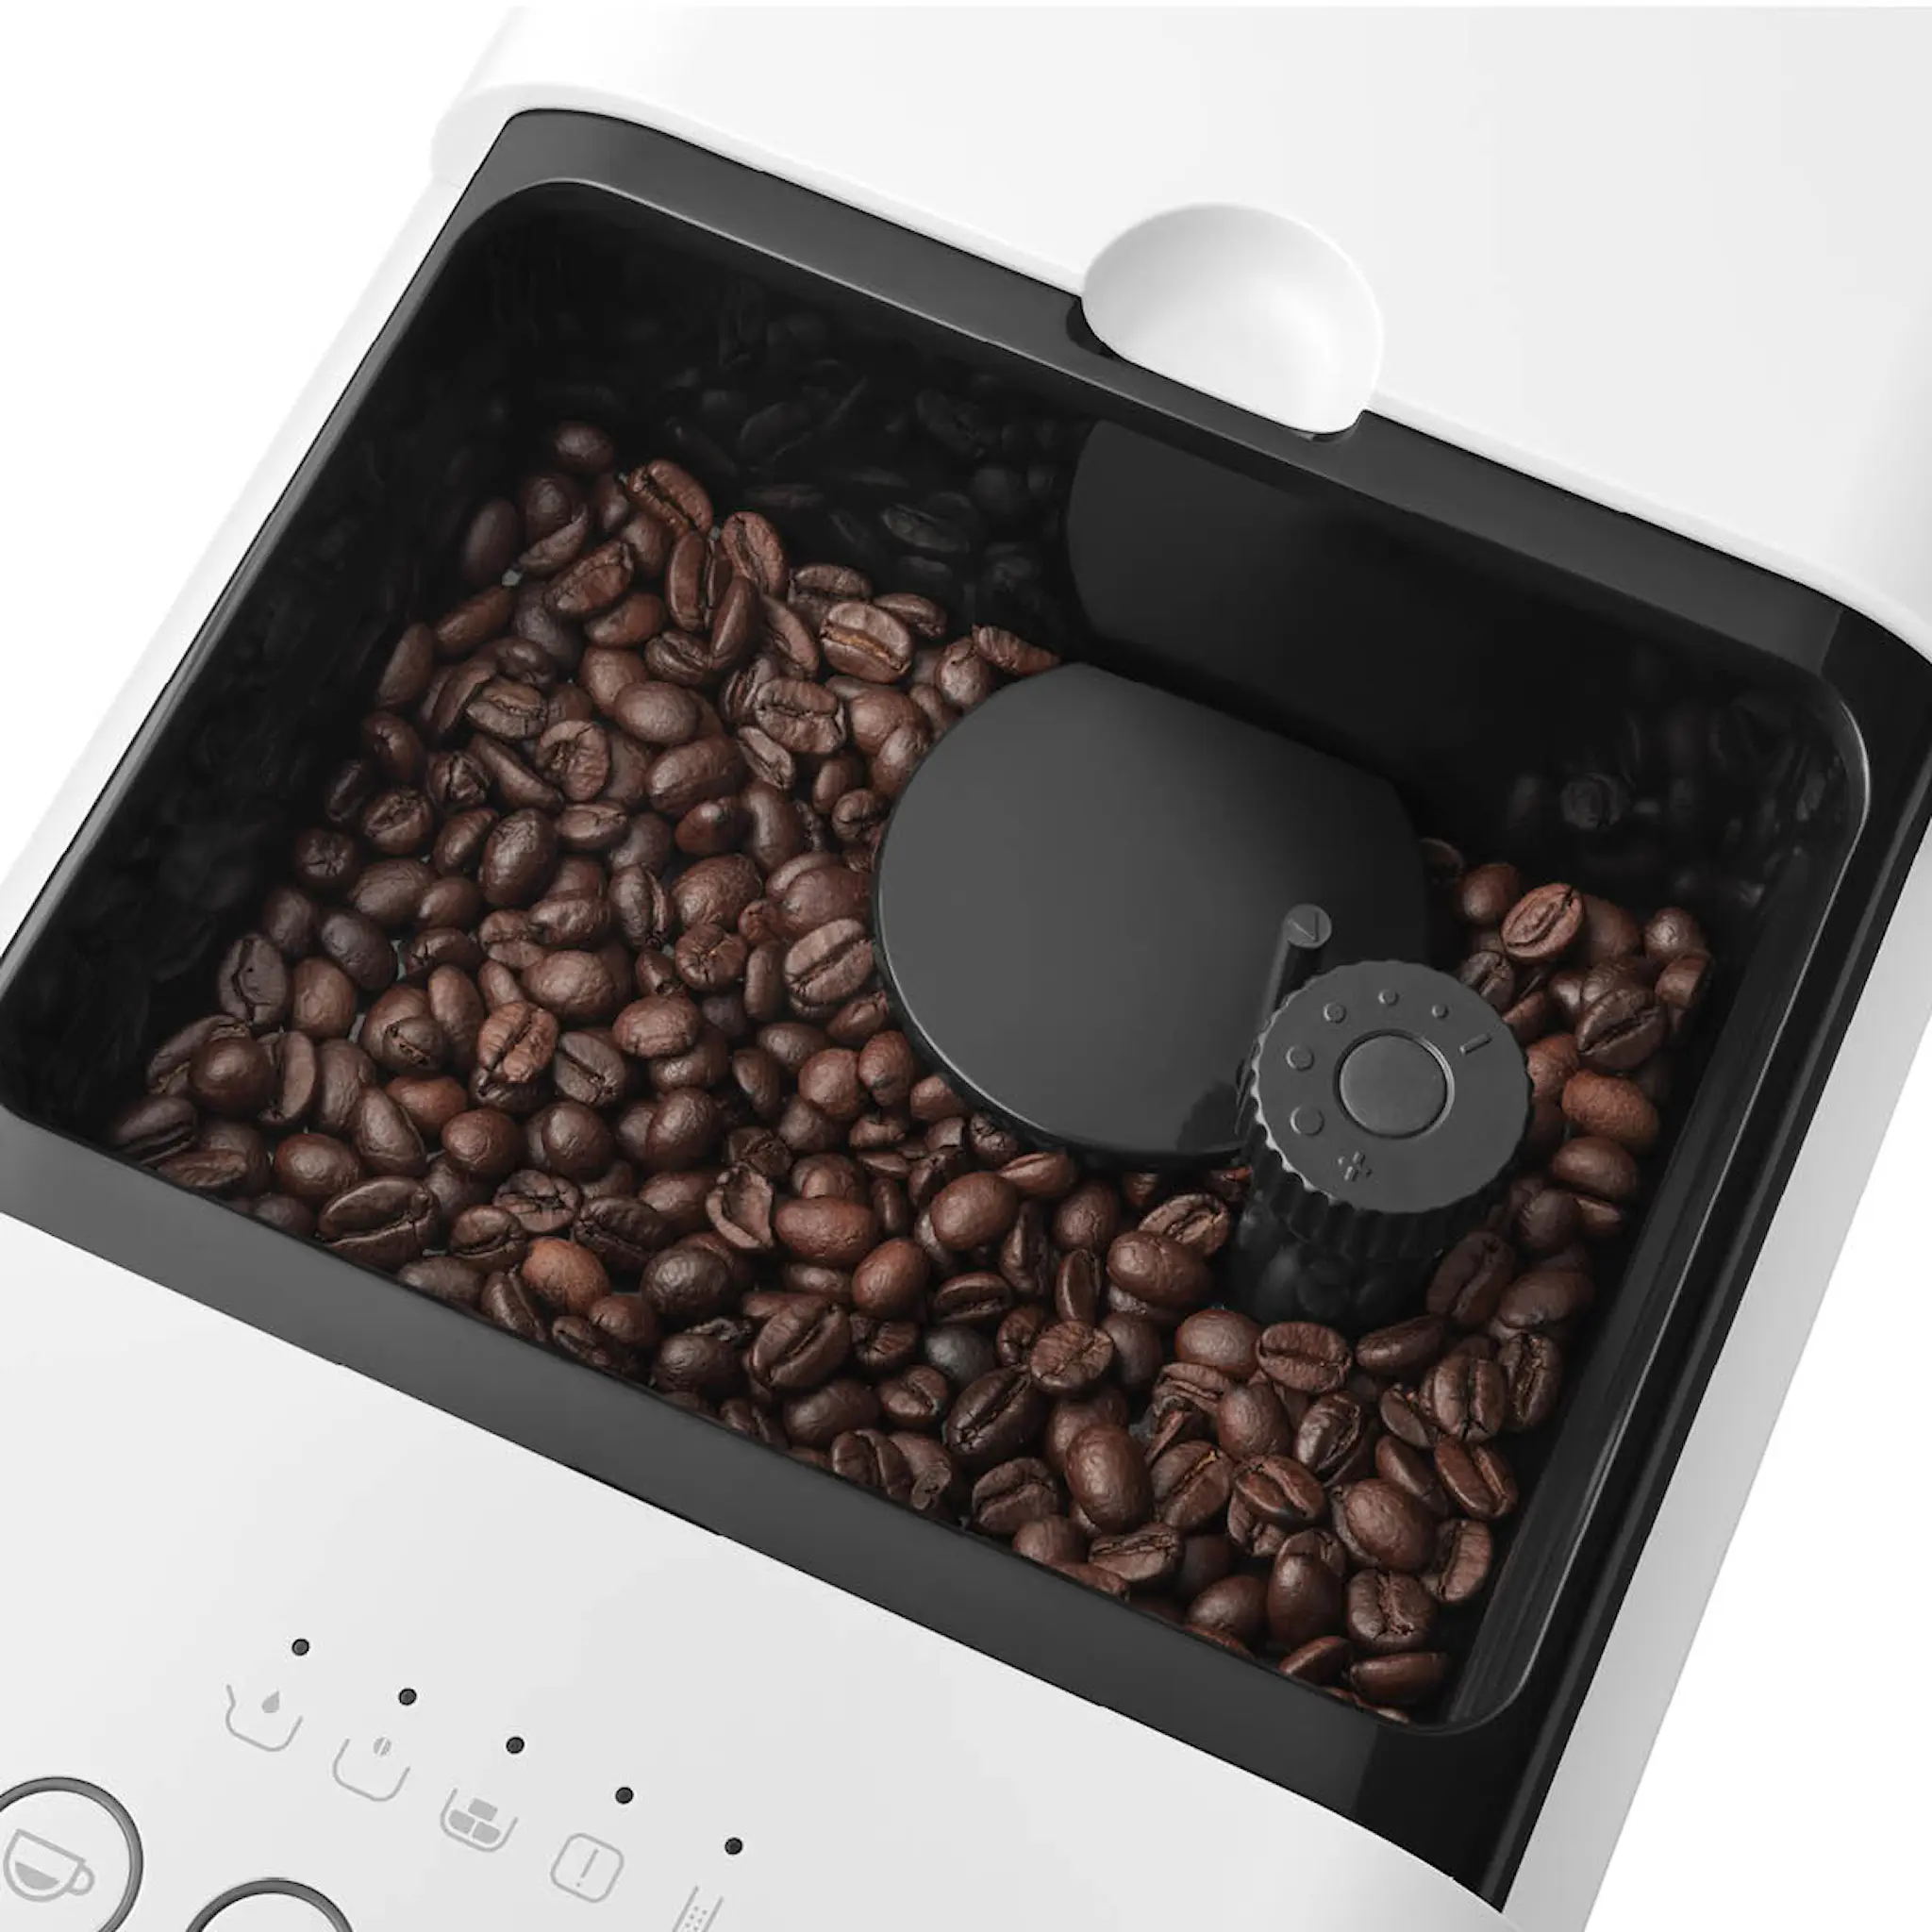 SMEG Smeg 50's Style Helautomatisk Kaffemaskin BCC01 Vit